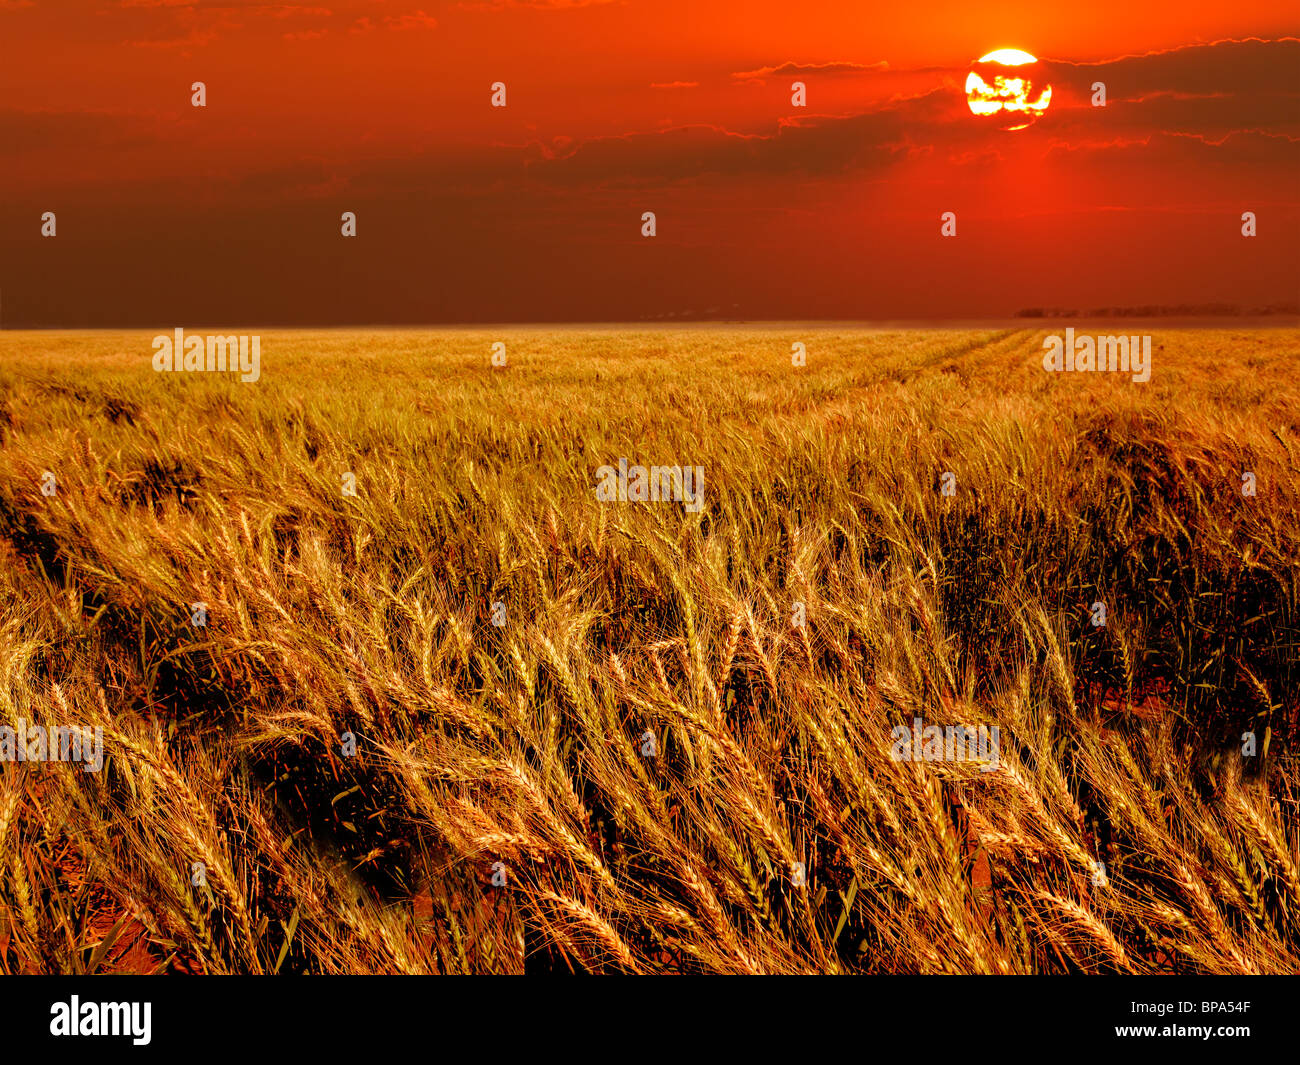 Wheat field in warm light at sunset Stock Photo